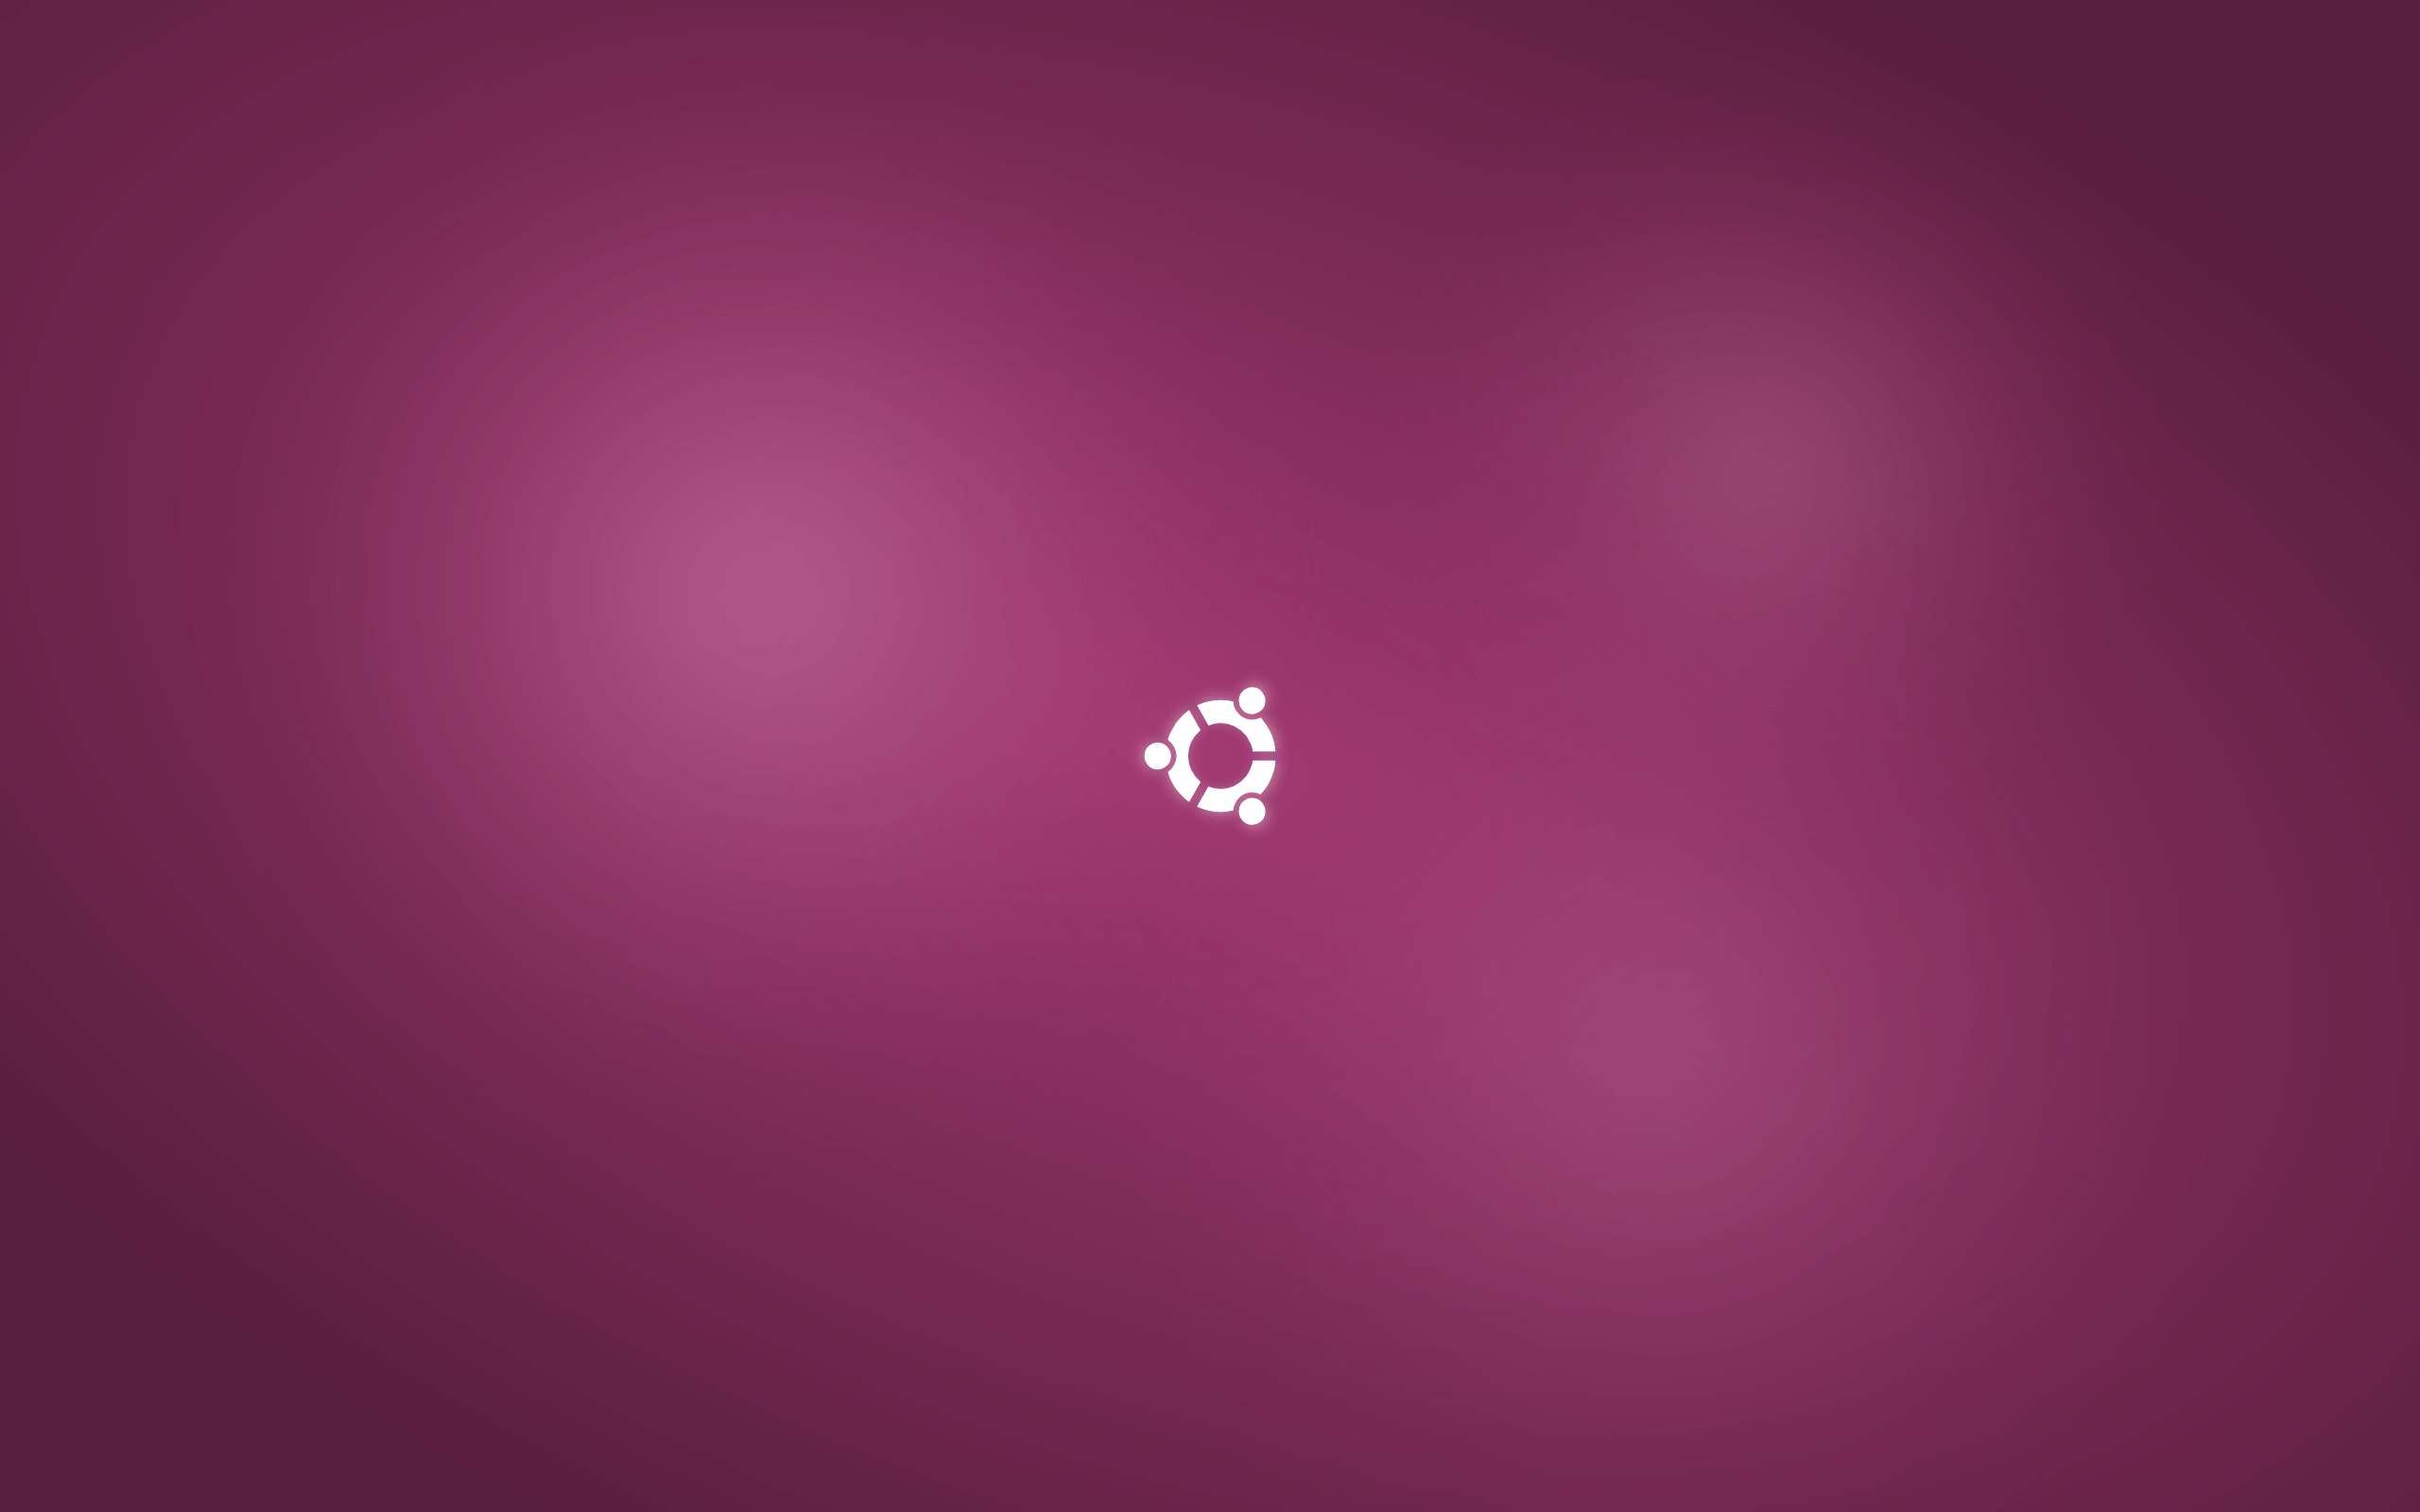 Ubuntu Background 40655 2560x1600 px